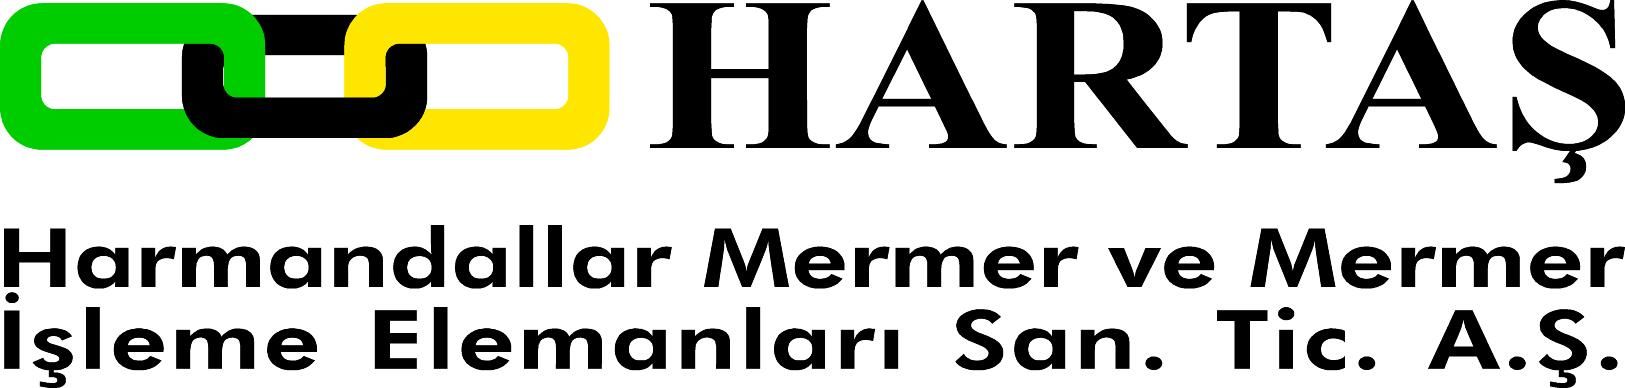 HARTAS Harmandallar Mermer San. Tic. A.S.